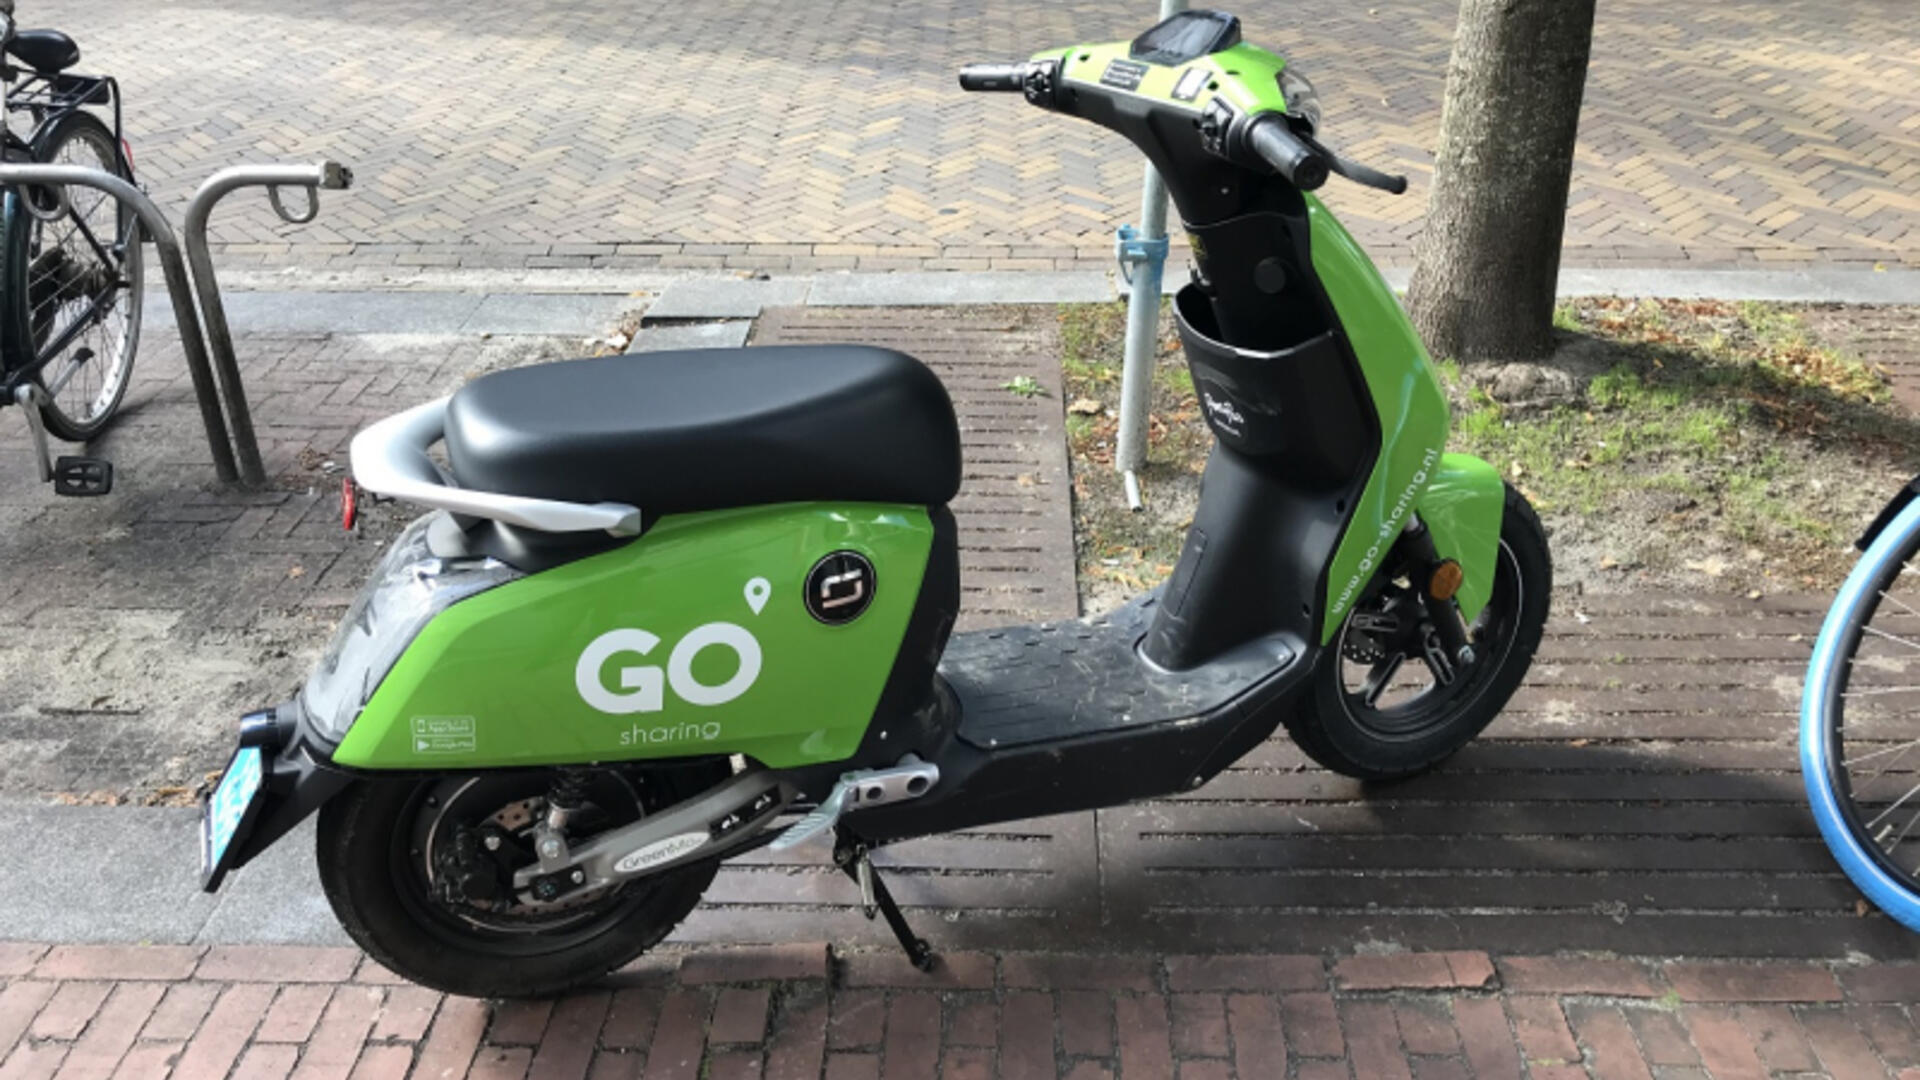 GO-sharing deelscooter